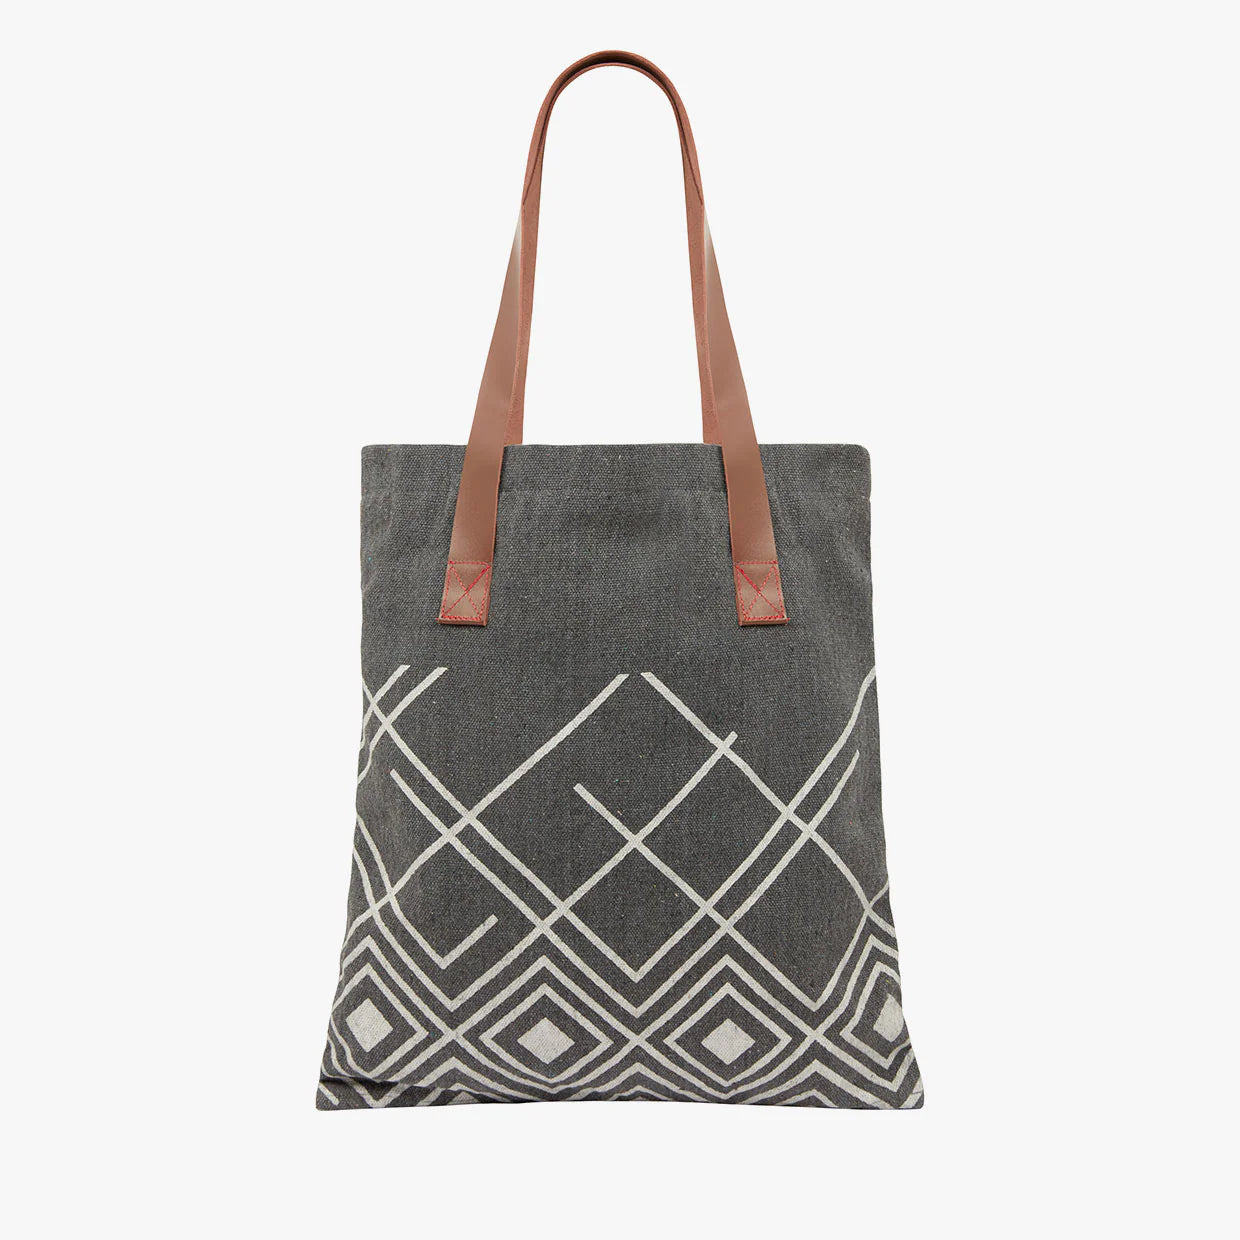 Yadawee Grey Block Printed Tote Bag With Leather Straps